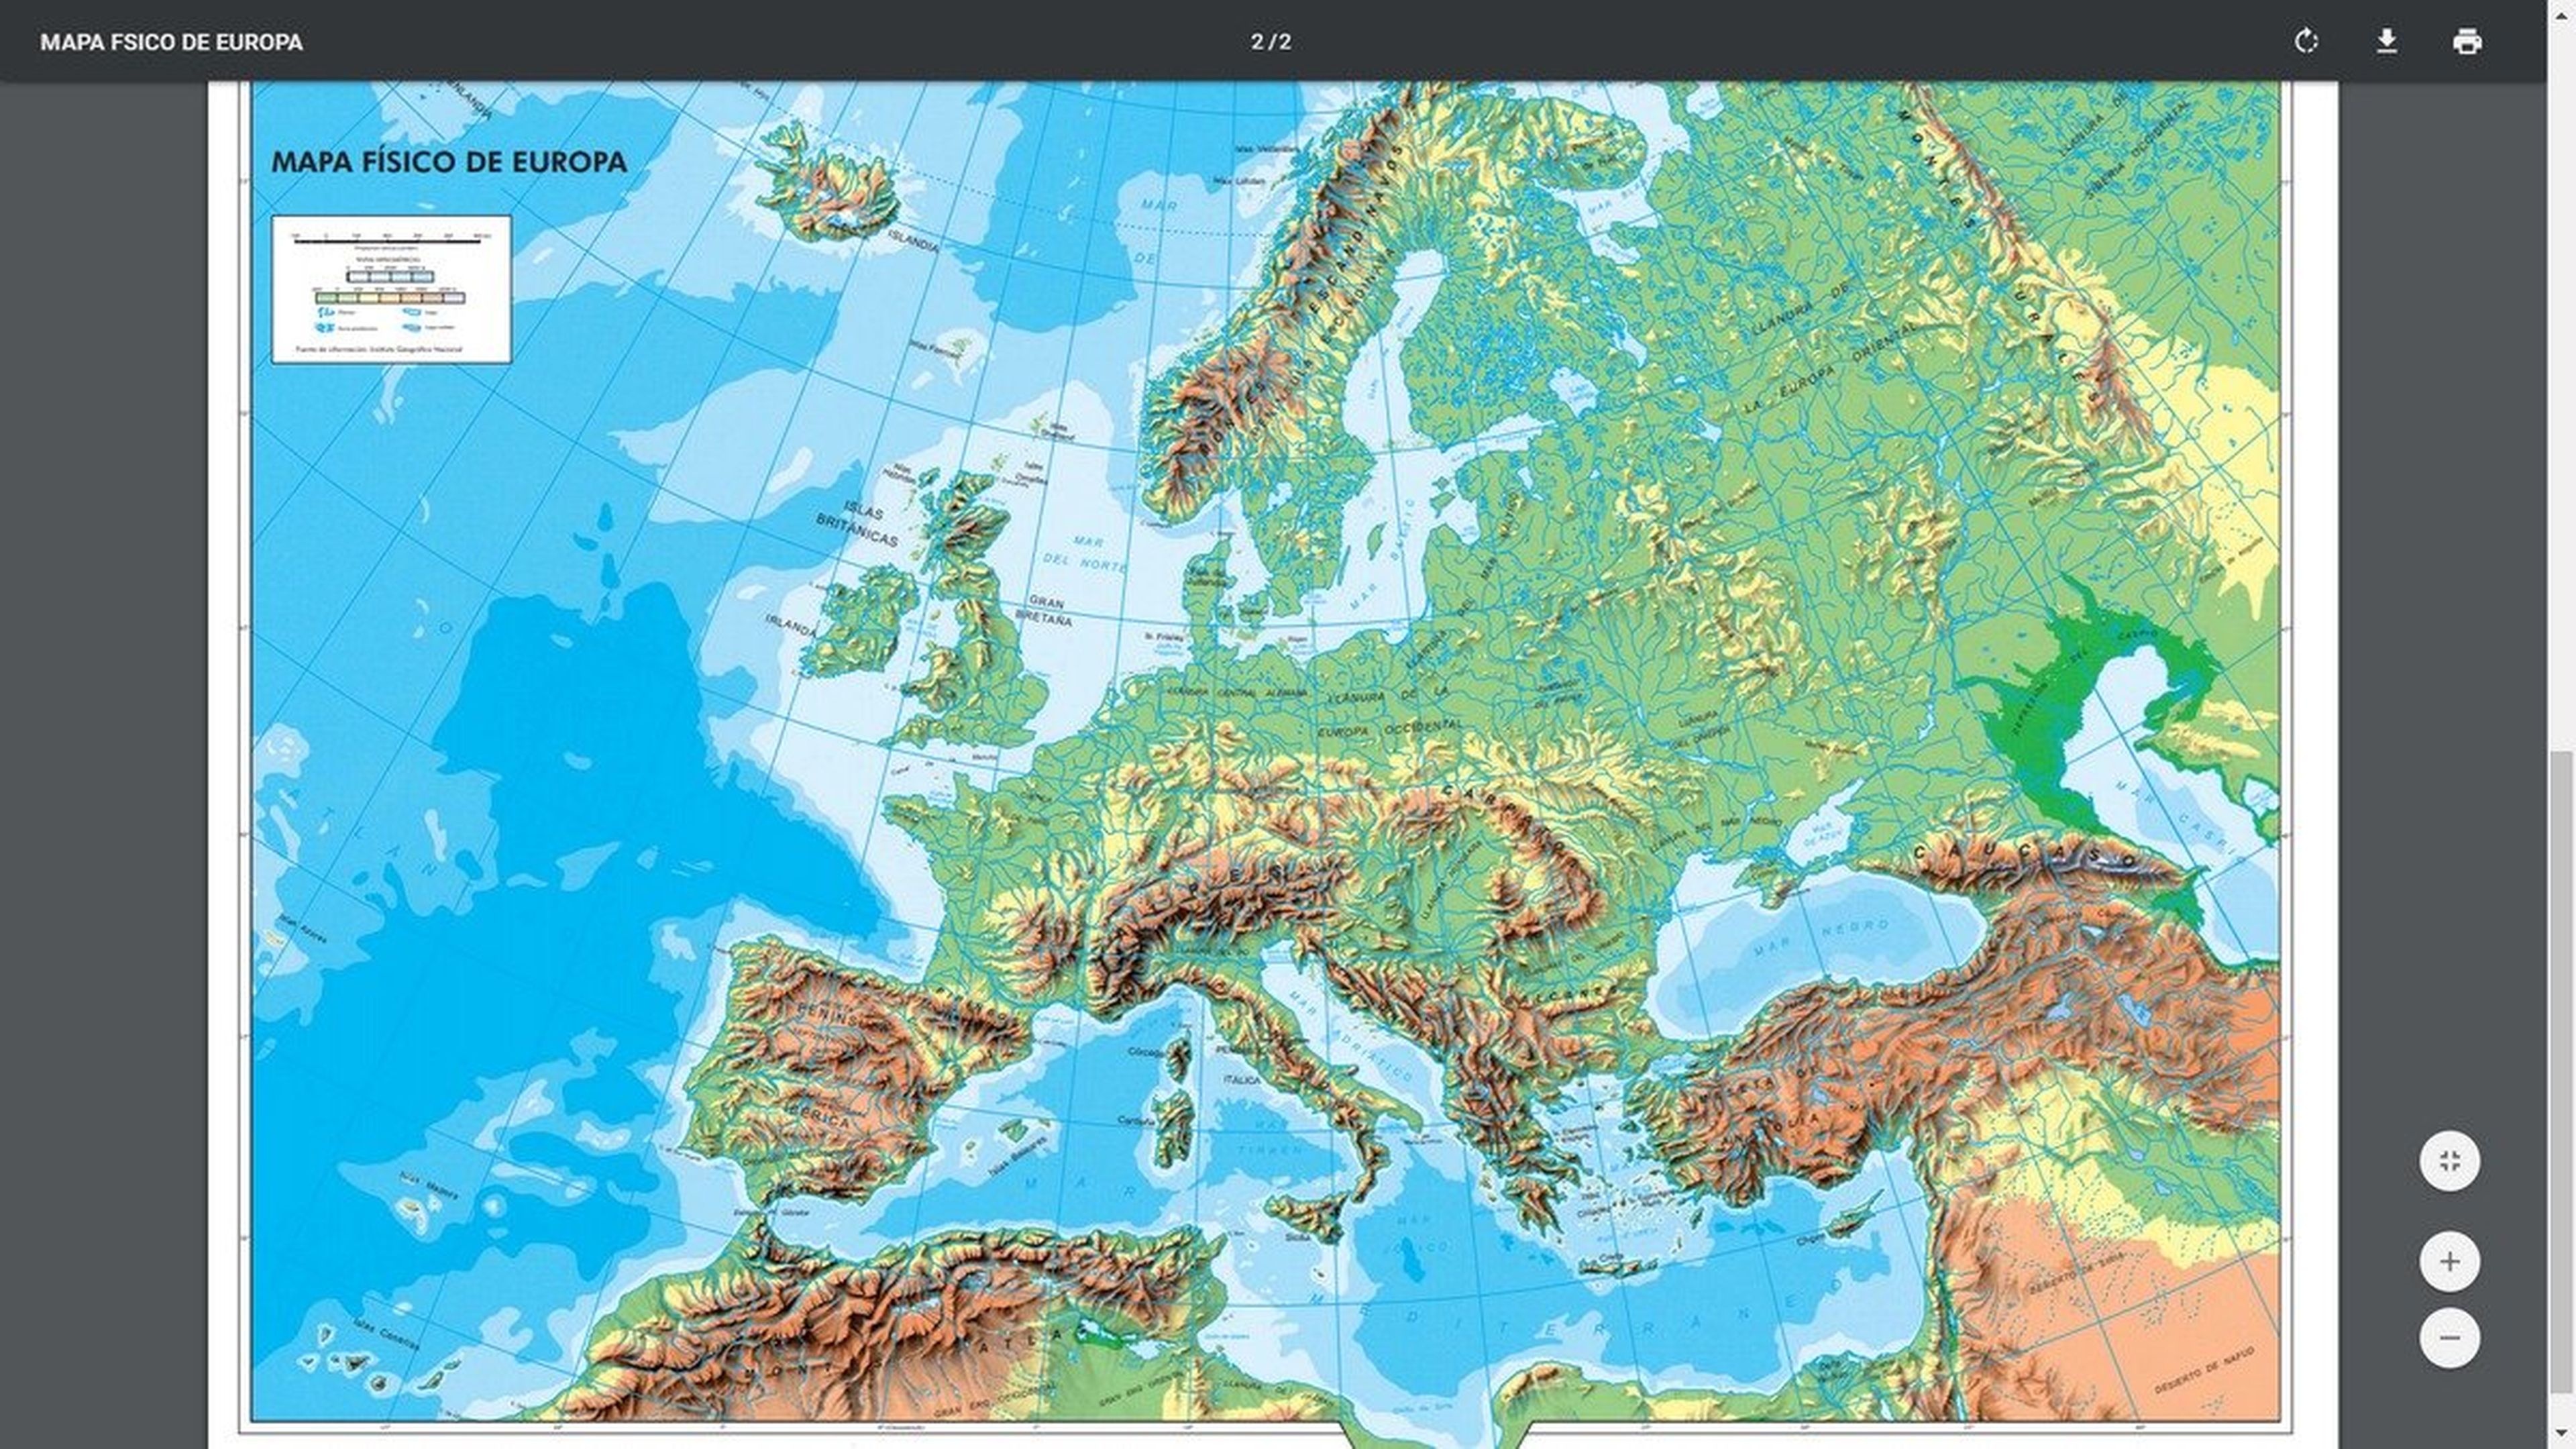 Corcho mapa de Europa blanco